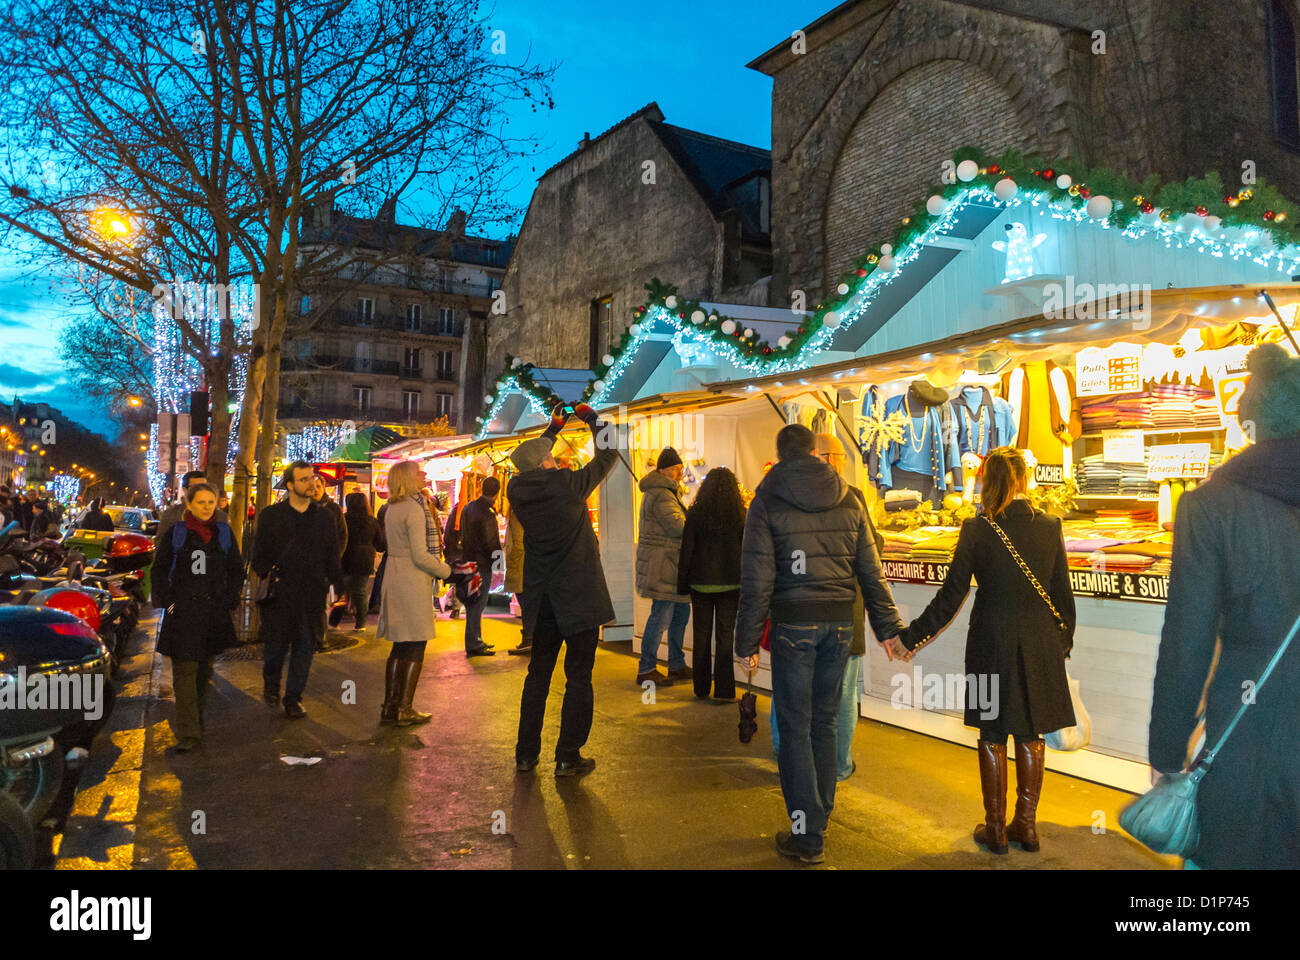 Paris, France, Street Scenes, Crowd of People Shopping at French Christmas Market in Latin Quarter, Saint Germain-des-Prés, Street Vendors Night Stock Photo